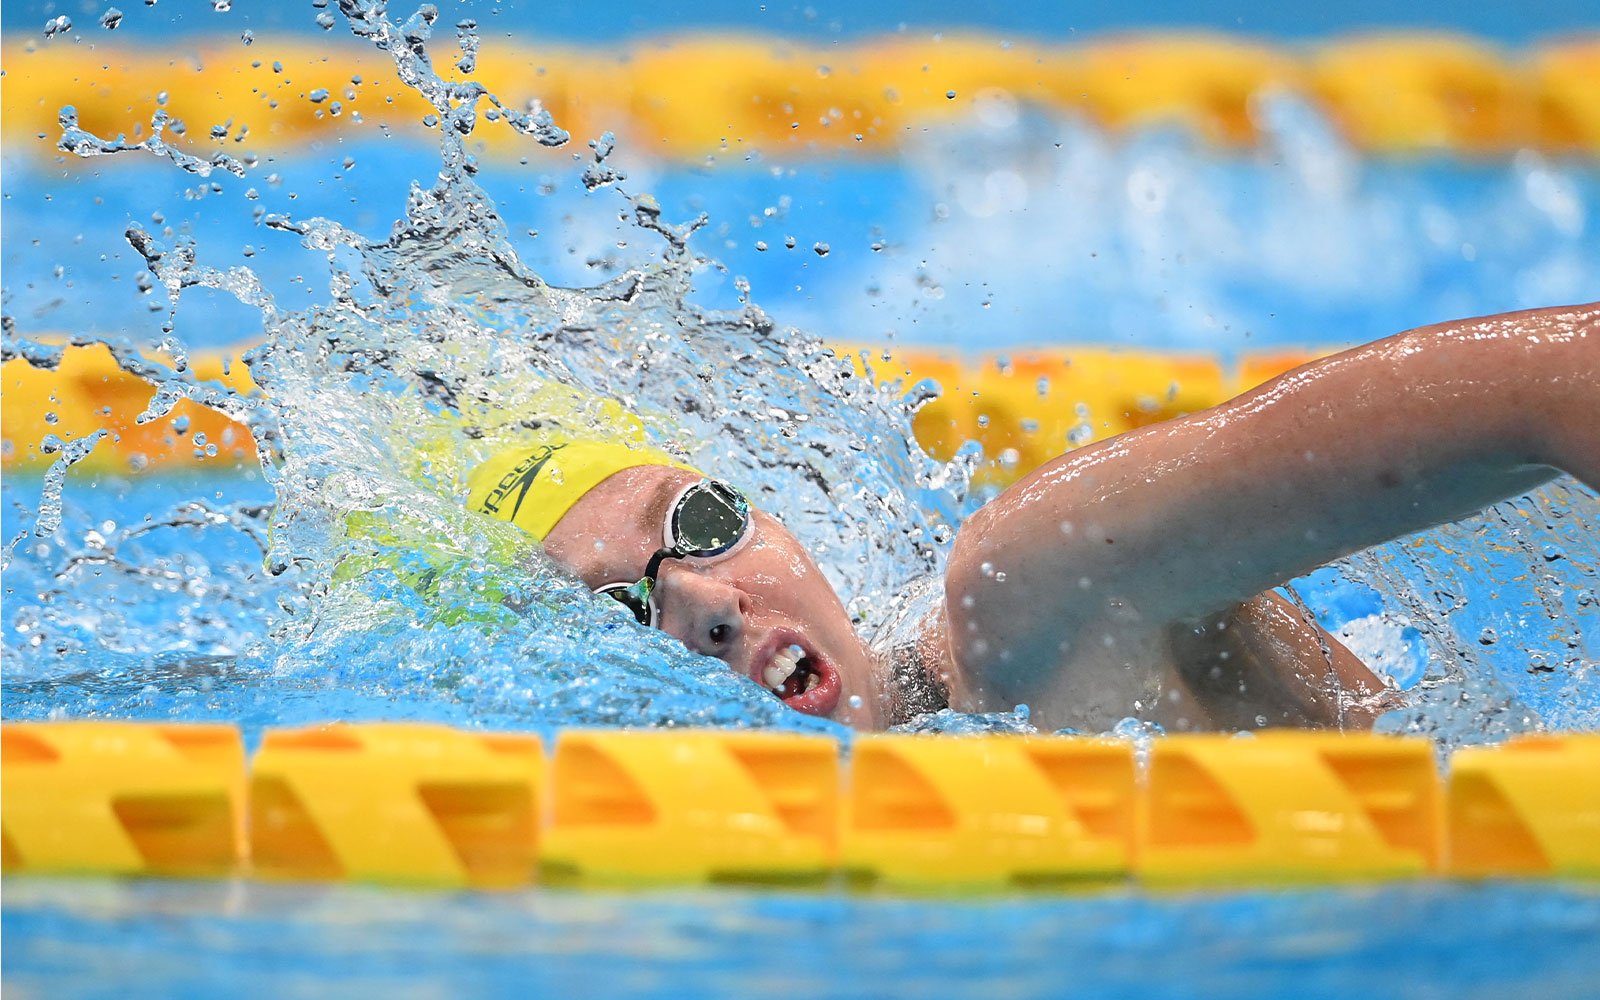 Australian Paralympian Lakeisha Patterson swimming freestyle